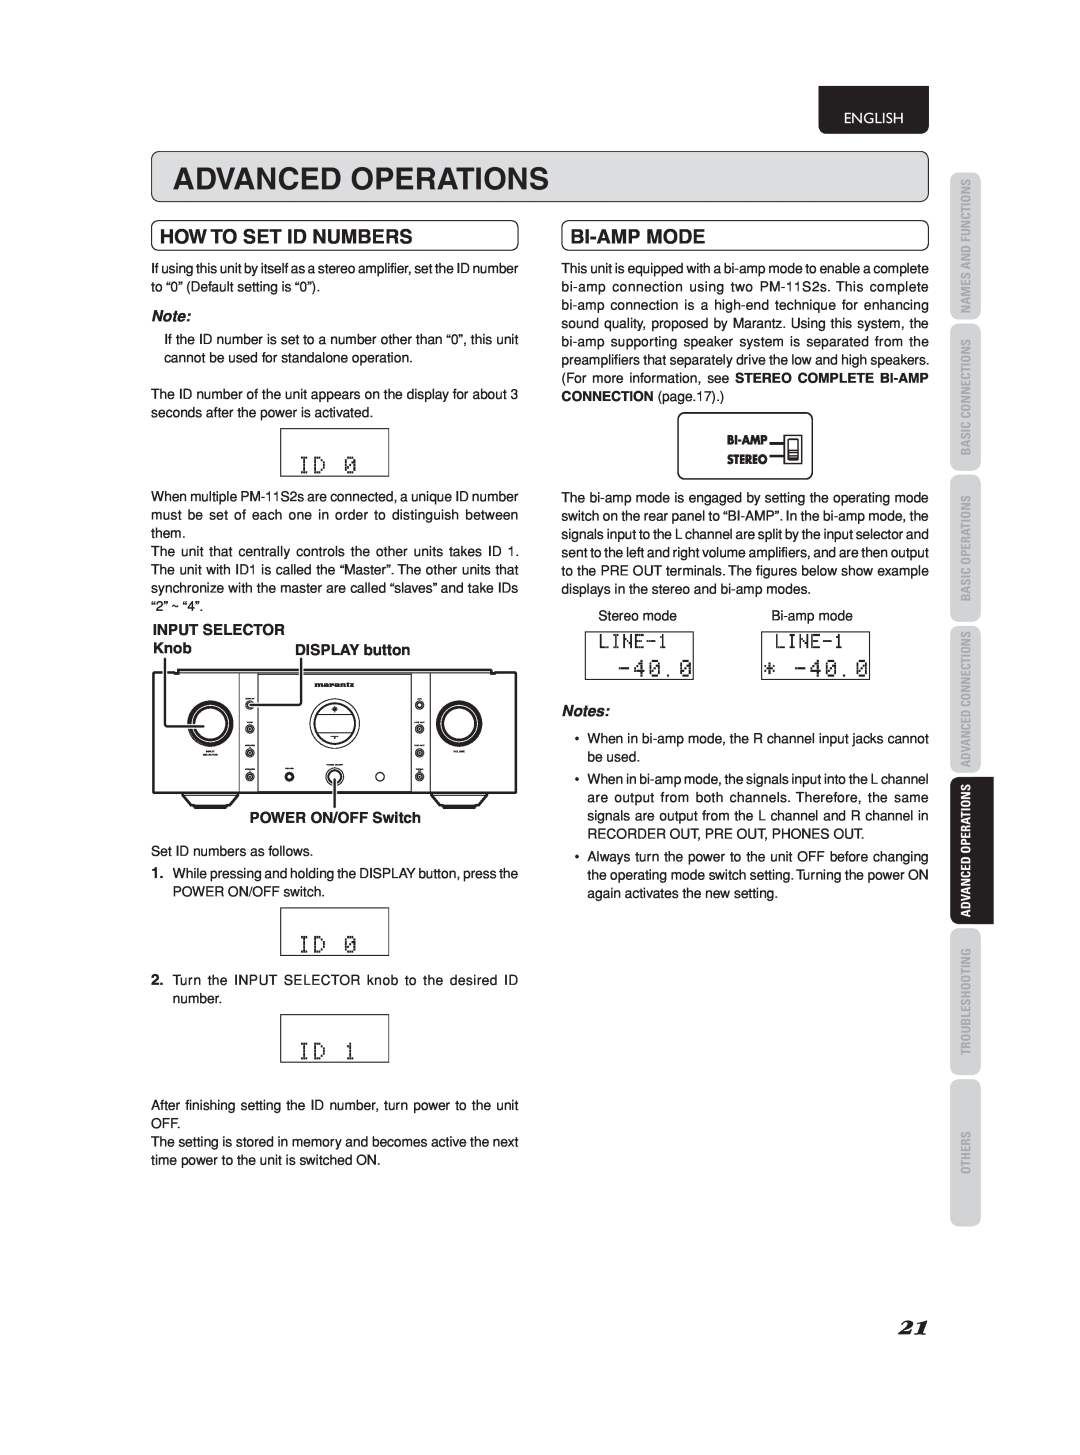 Marantz PM-11S2 manual How To Set Id Numbers, Bi-Ampmode, Advanced Operations, English 